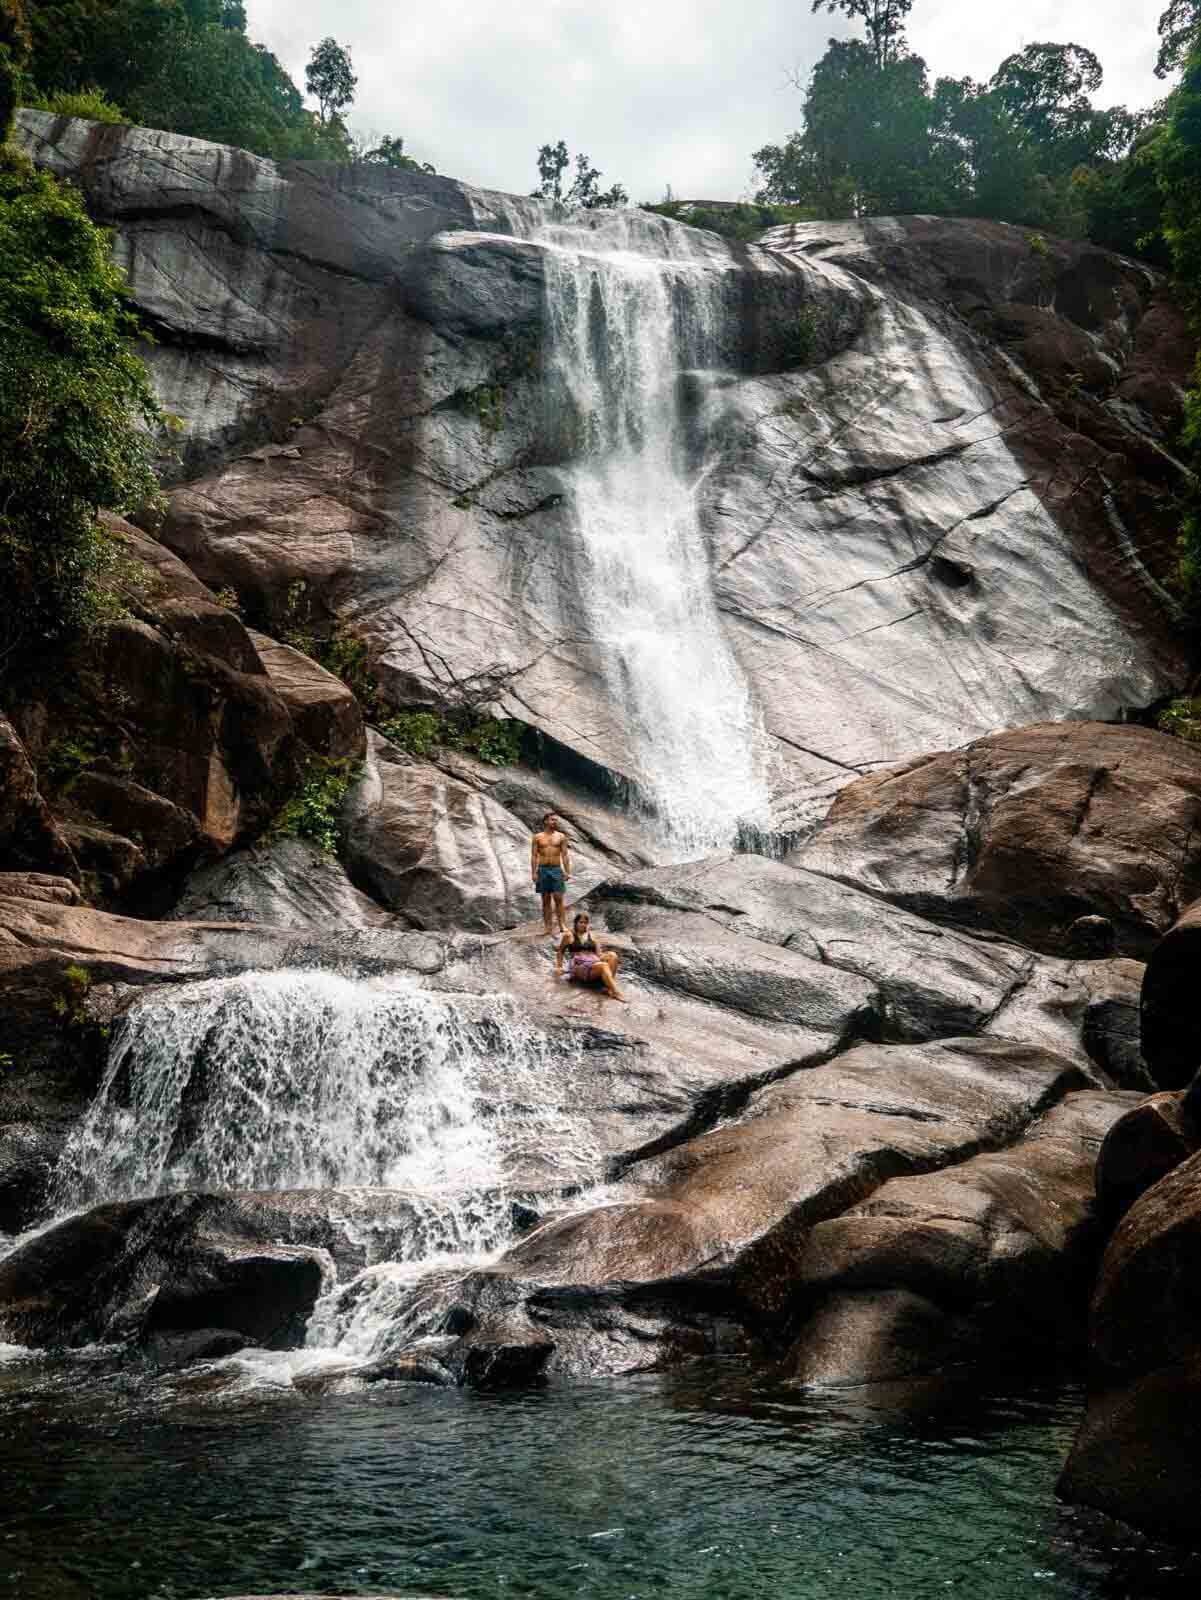 Seven Wells Waterfall, Langkawi - Bottom pool rocks